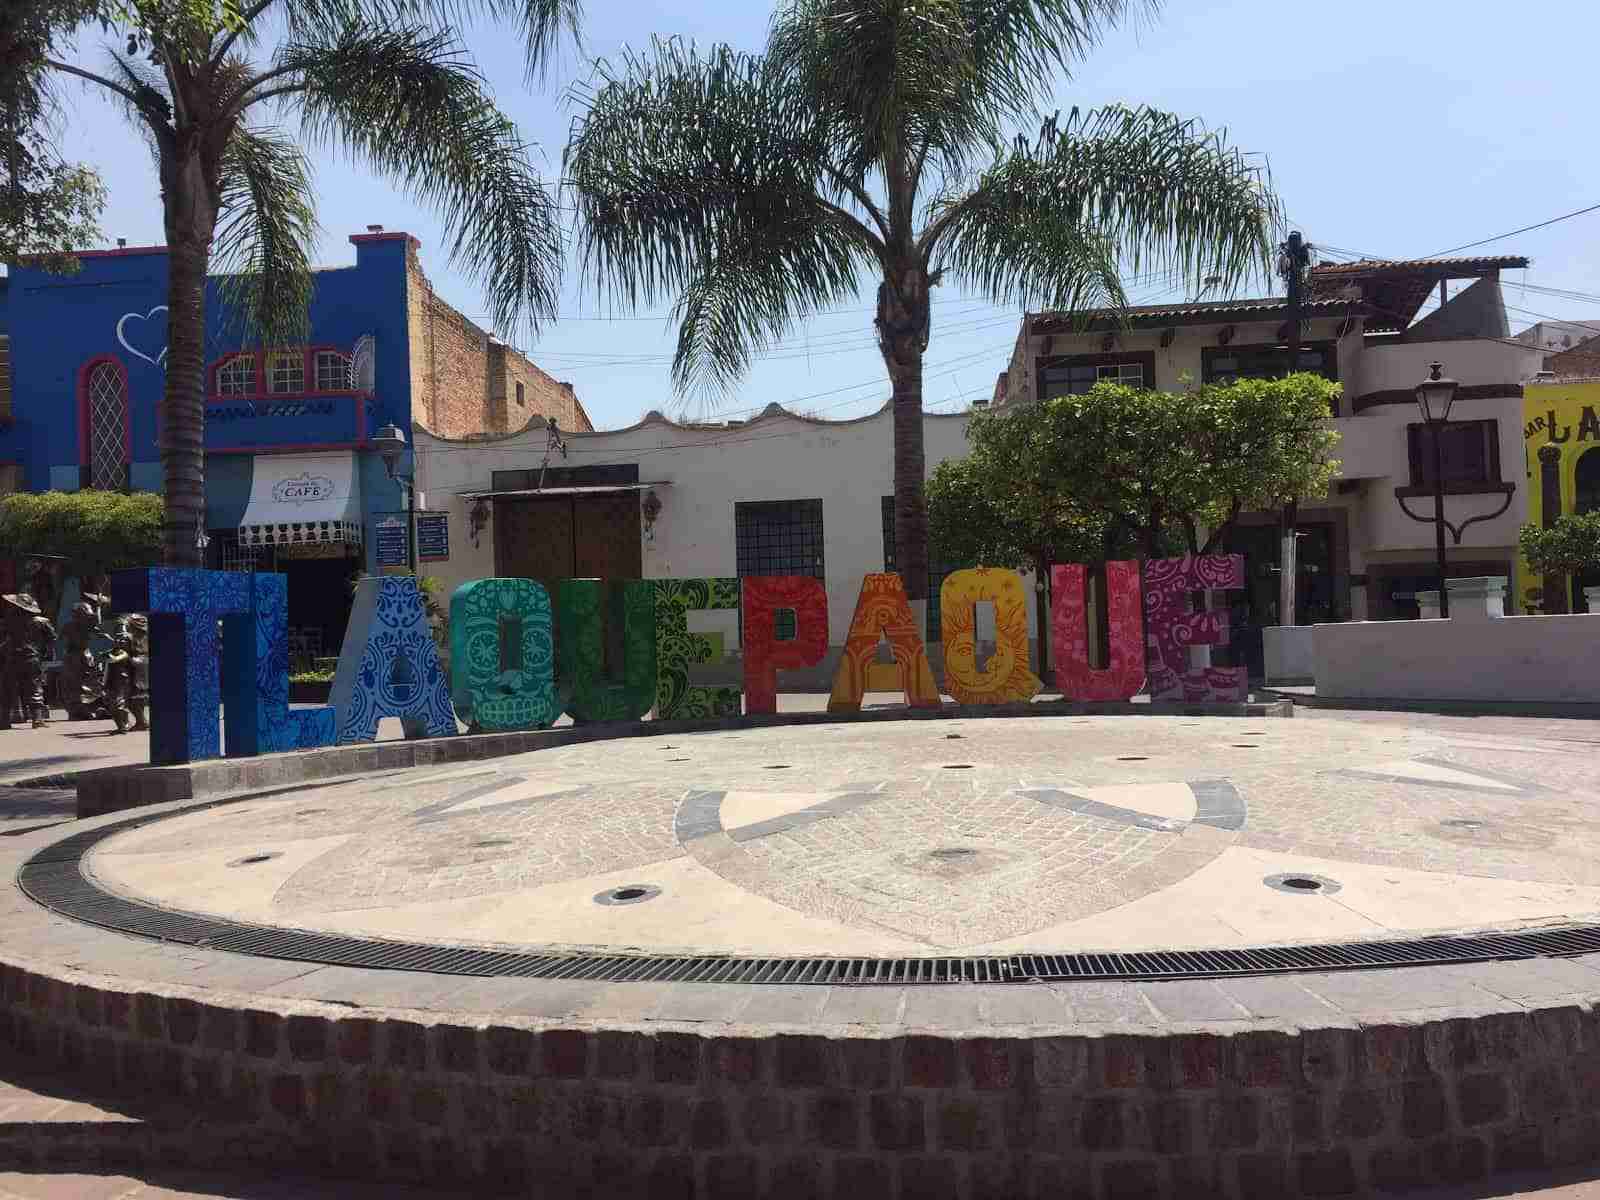 Tlaquepaque, Mexico in an Afternoon